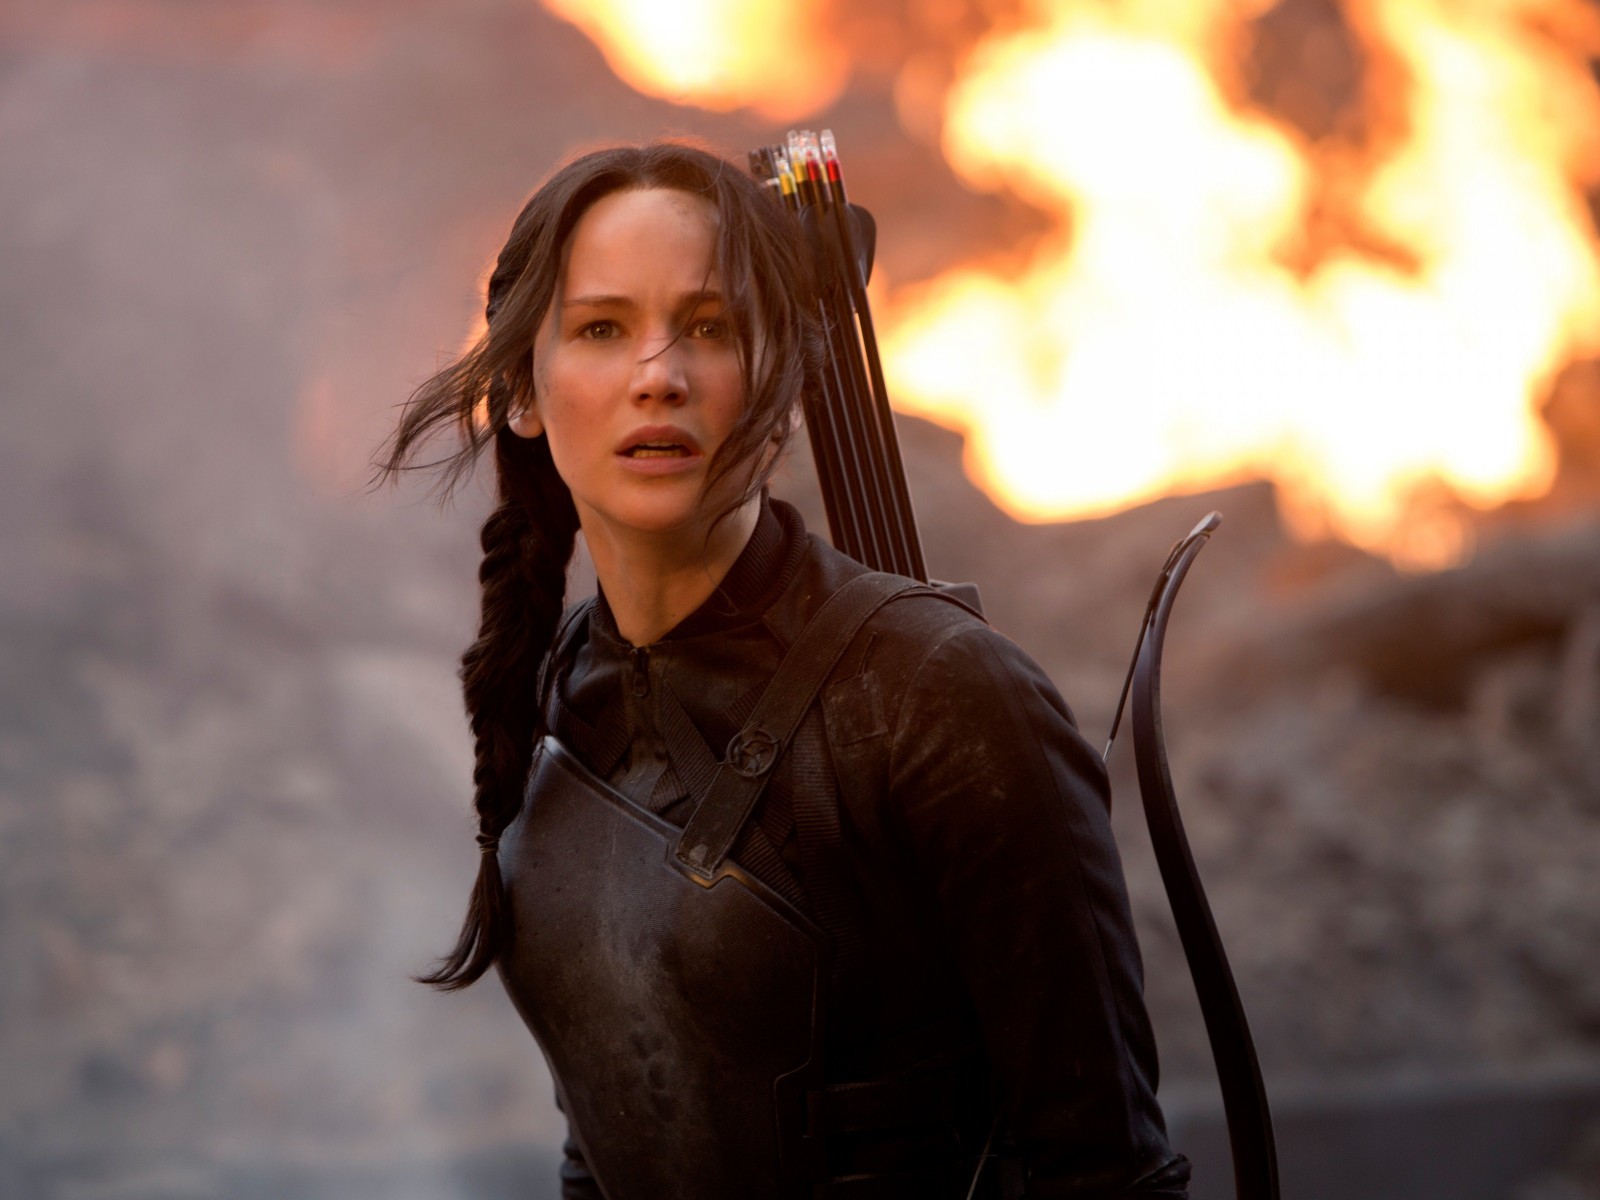 Jennifer Lawrence in The Hunger Games Wallpaper for Desktop 1600x1200